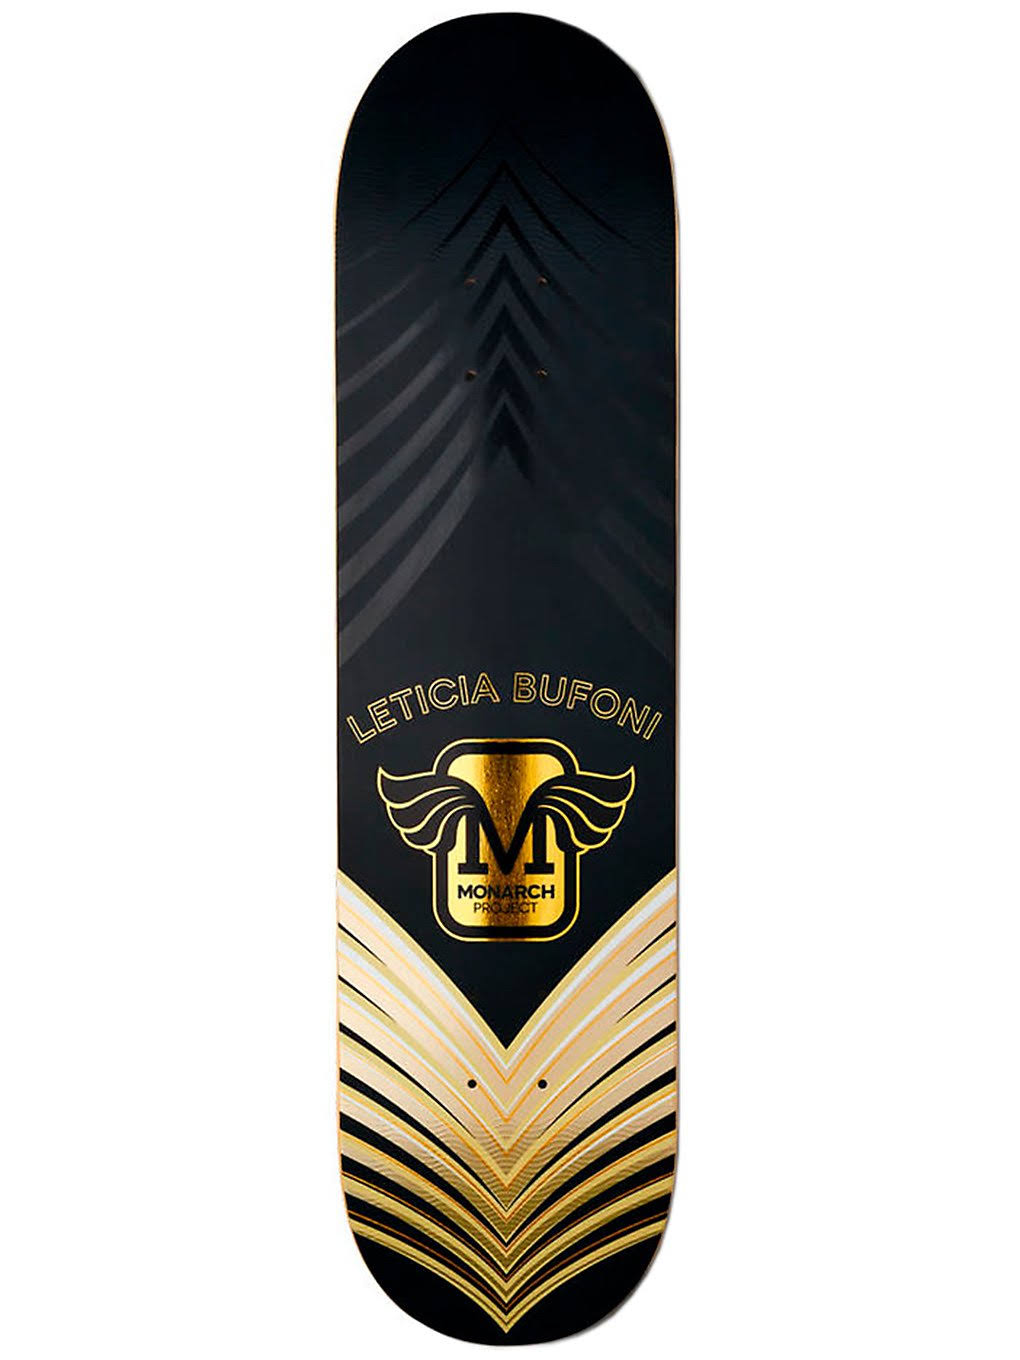 Monarch Project Horus R7 Leticia Bufoni 8" Skateboard Deck Yellow